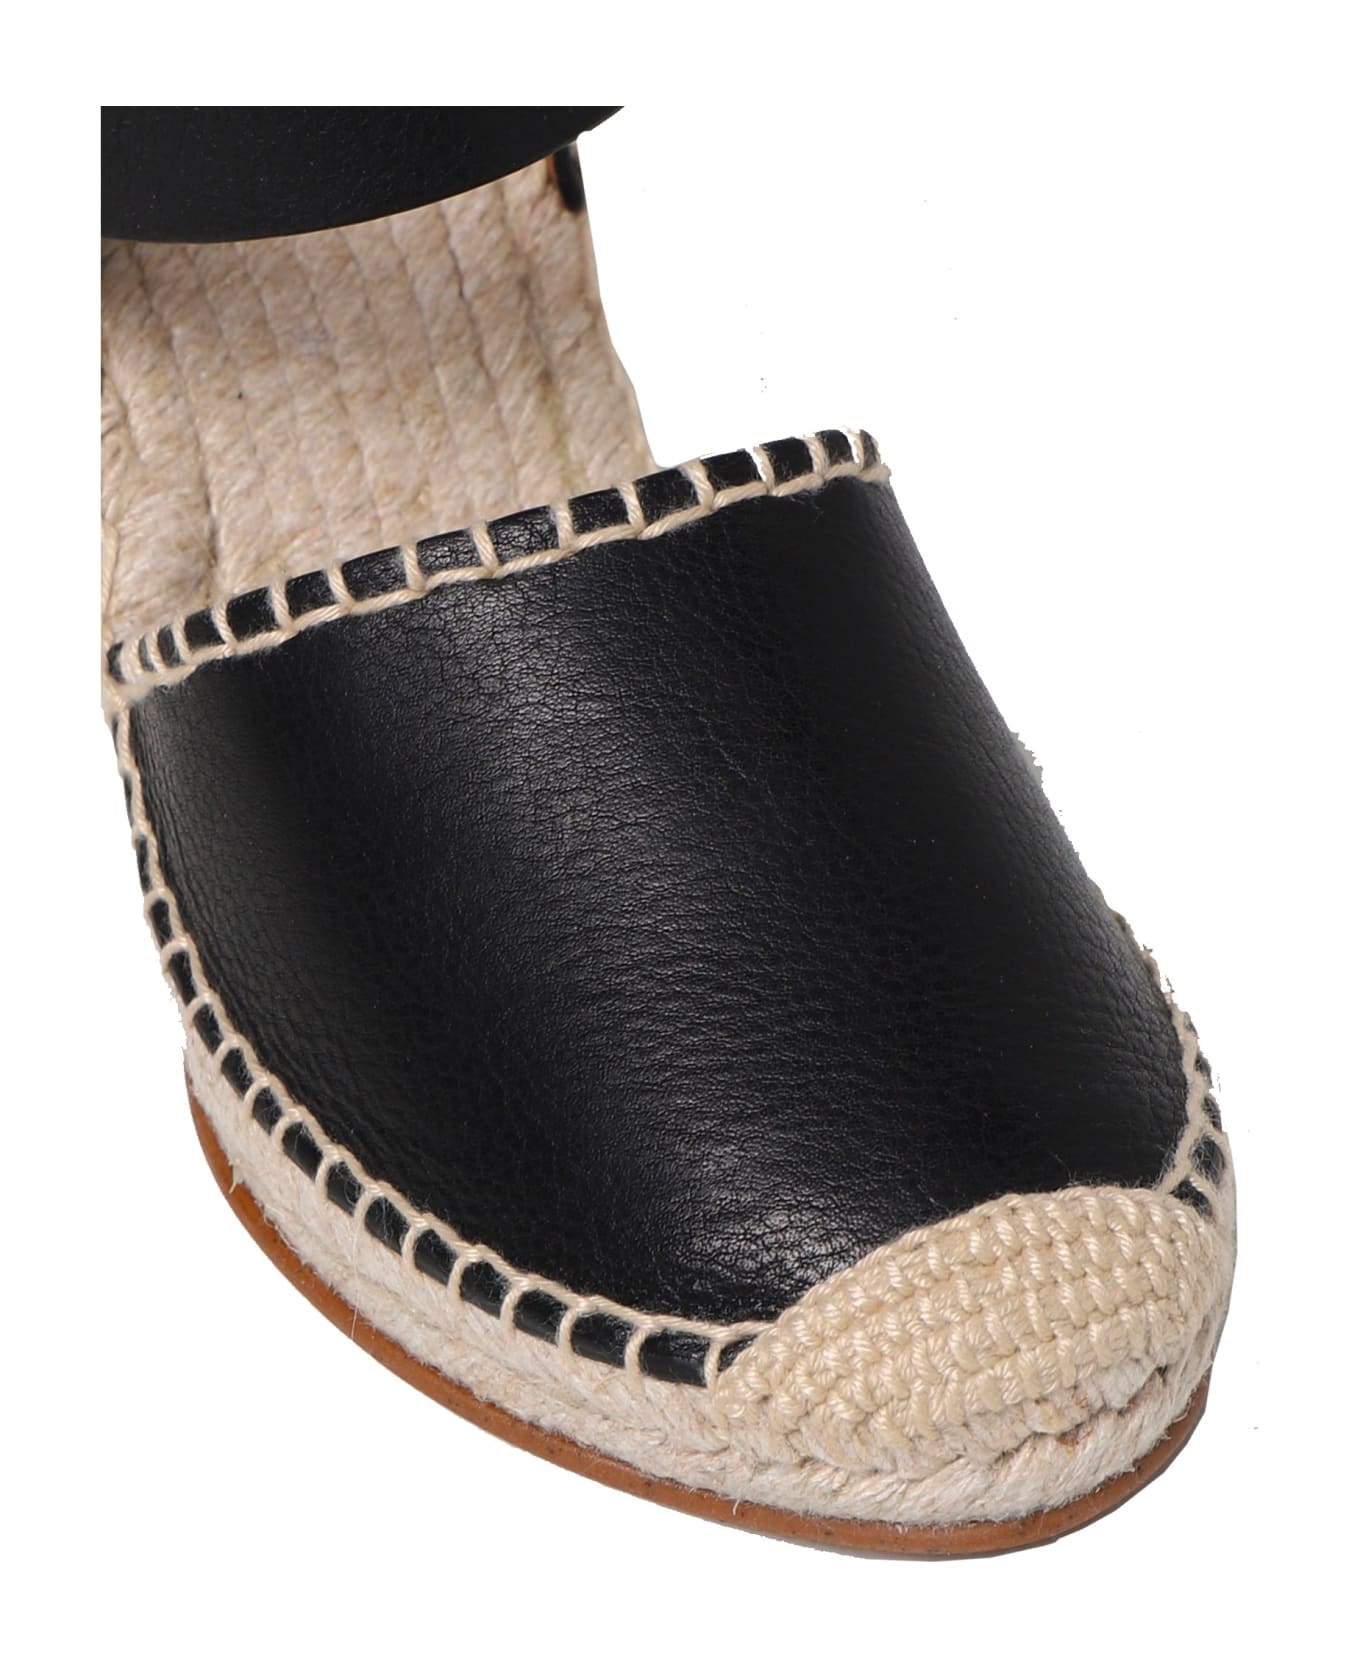 Chloé Leather Wedge Sandals - Black